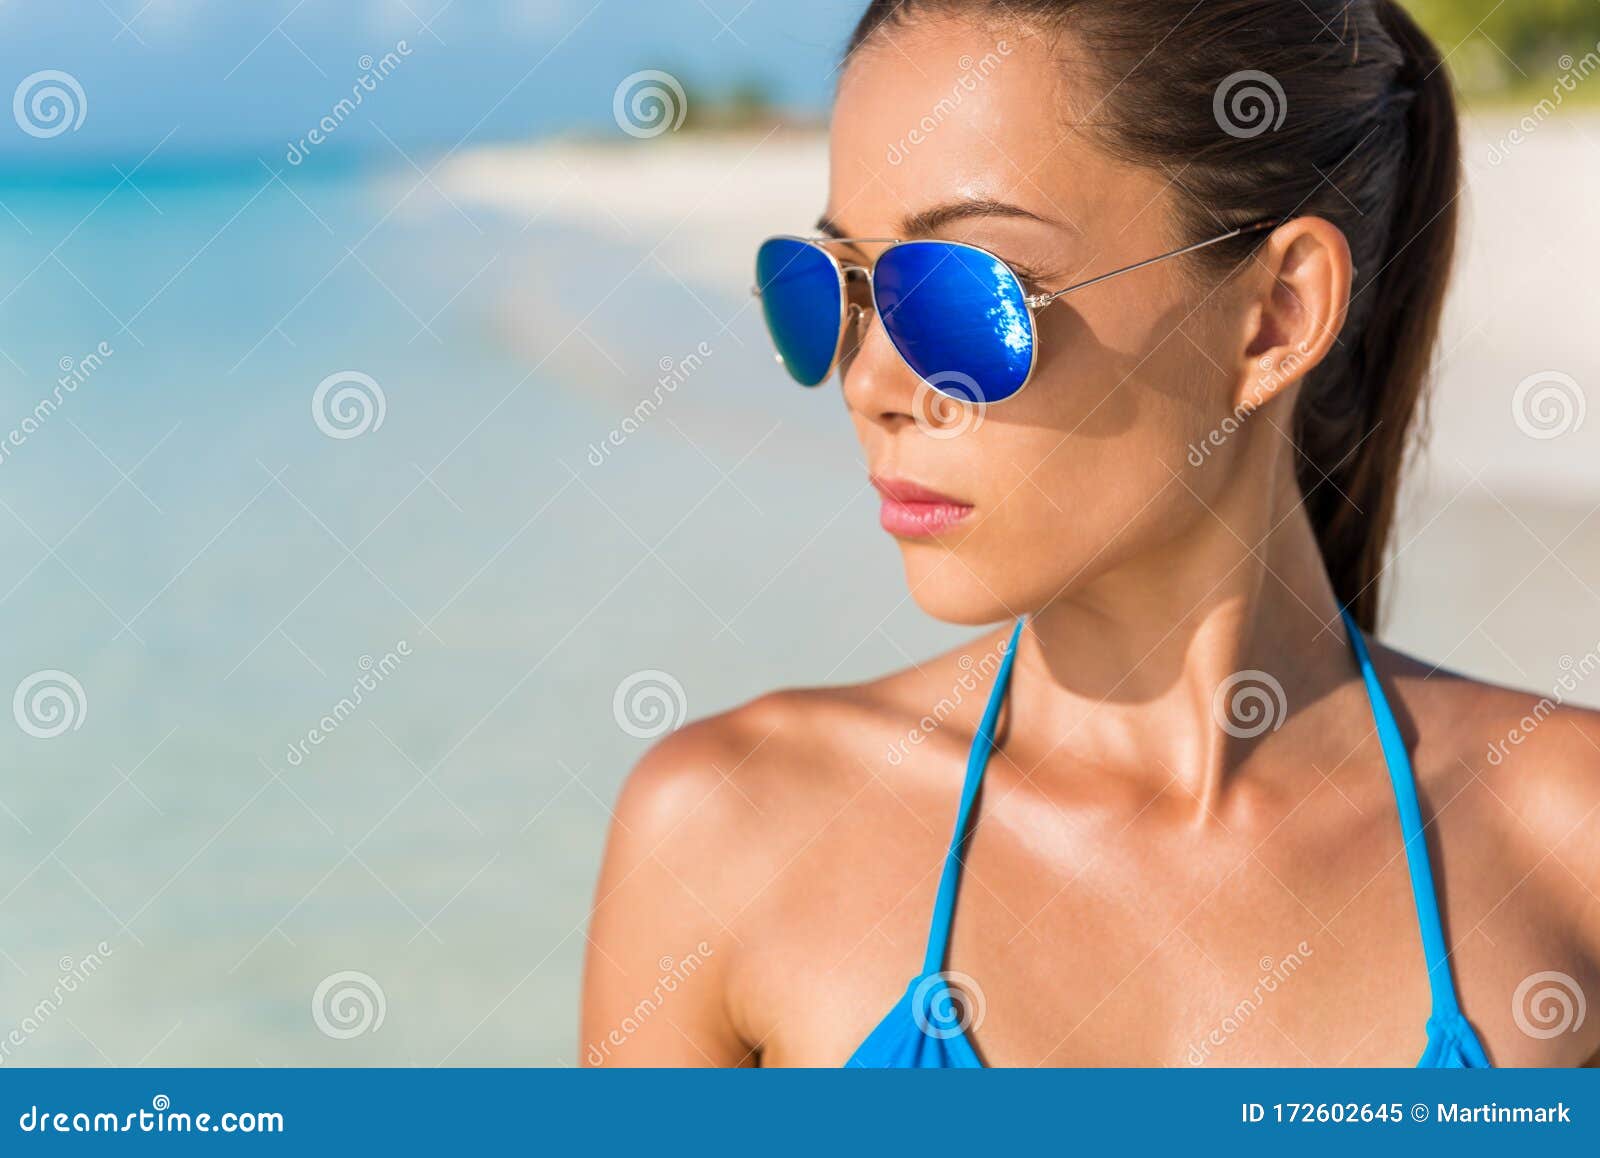 Blue Mirror Aviator Sunglasses Woman Beauty. Beach Bikini Asian ...